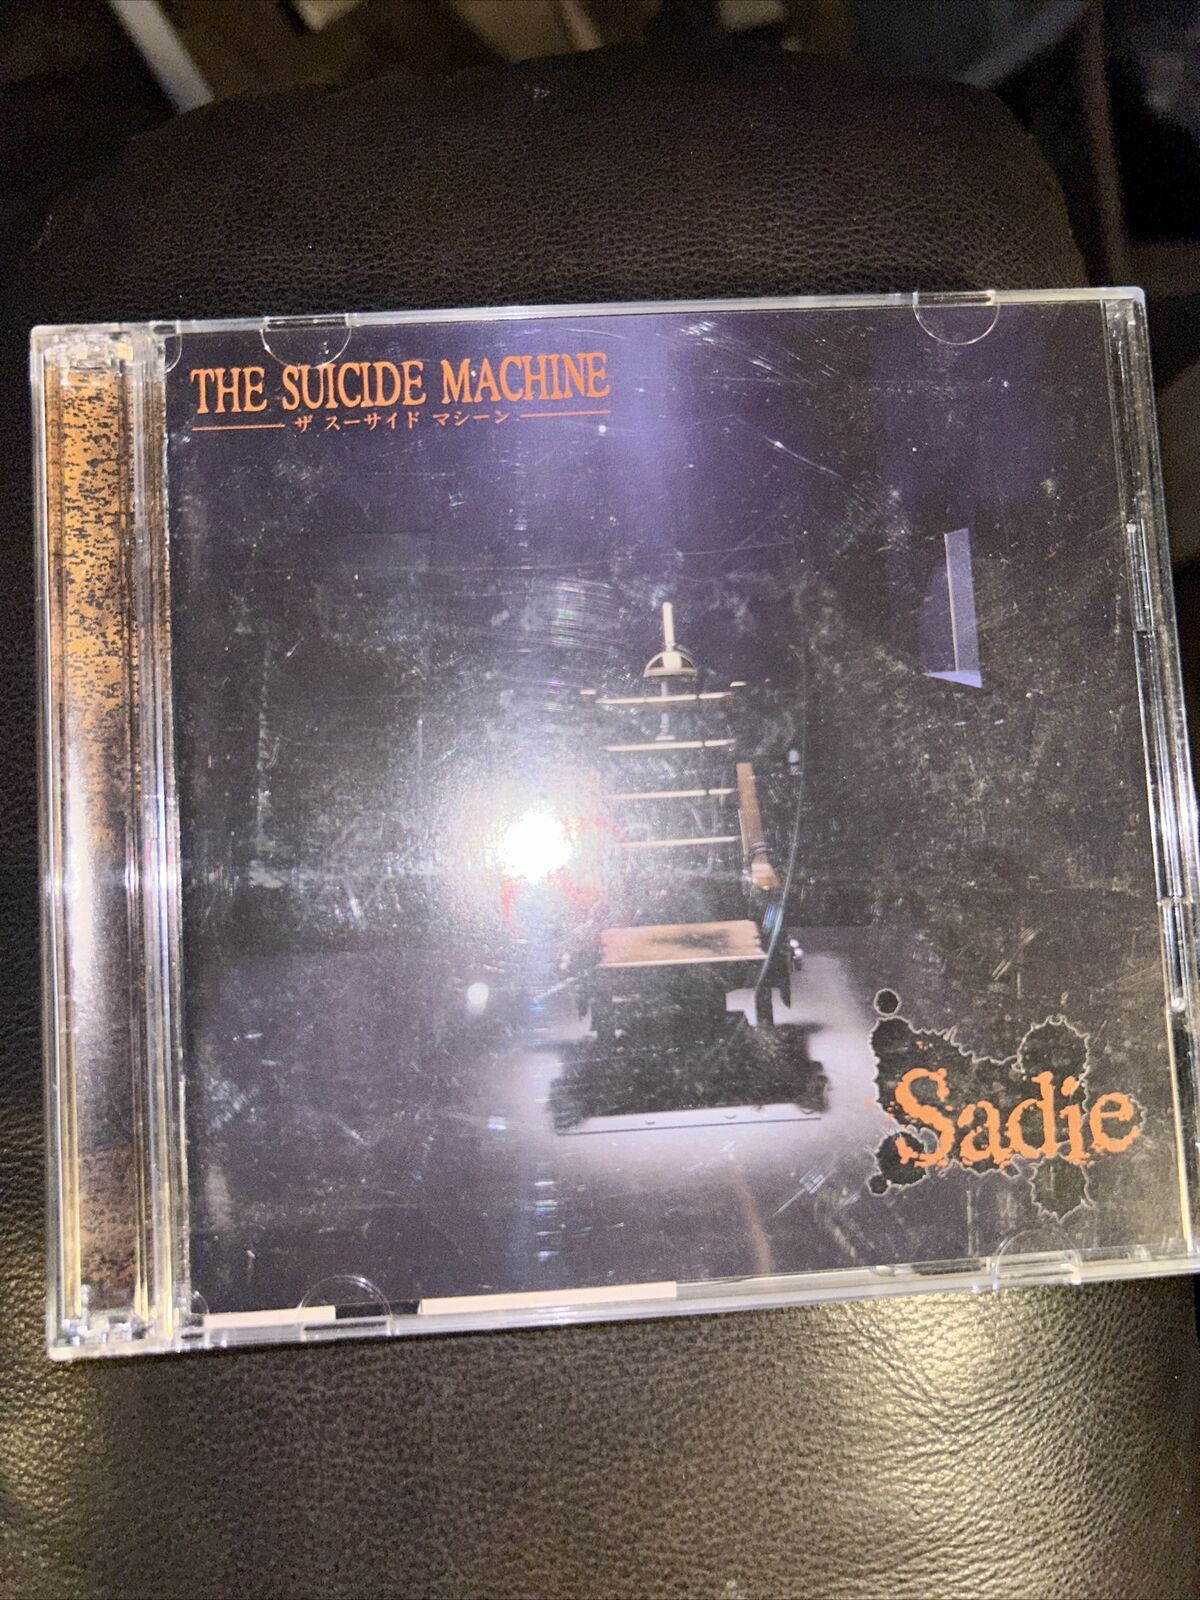 Sadie – The Suicide Machine MRS-0008 JAPAN CD+DVD OBI